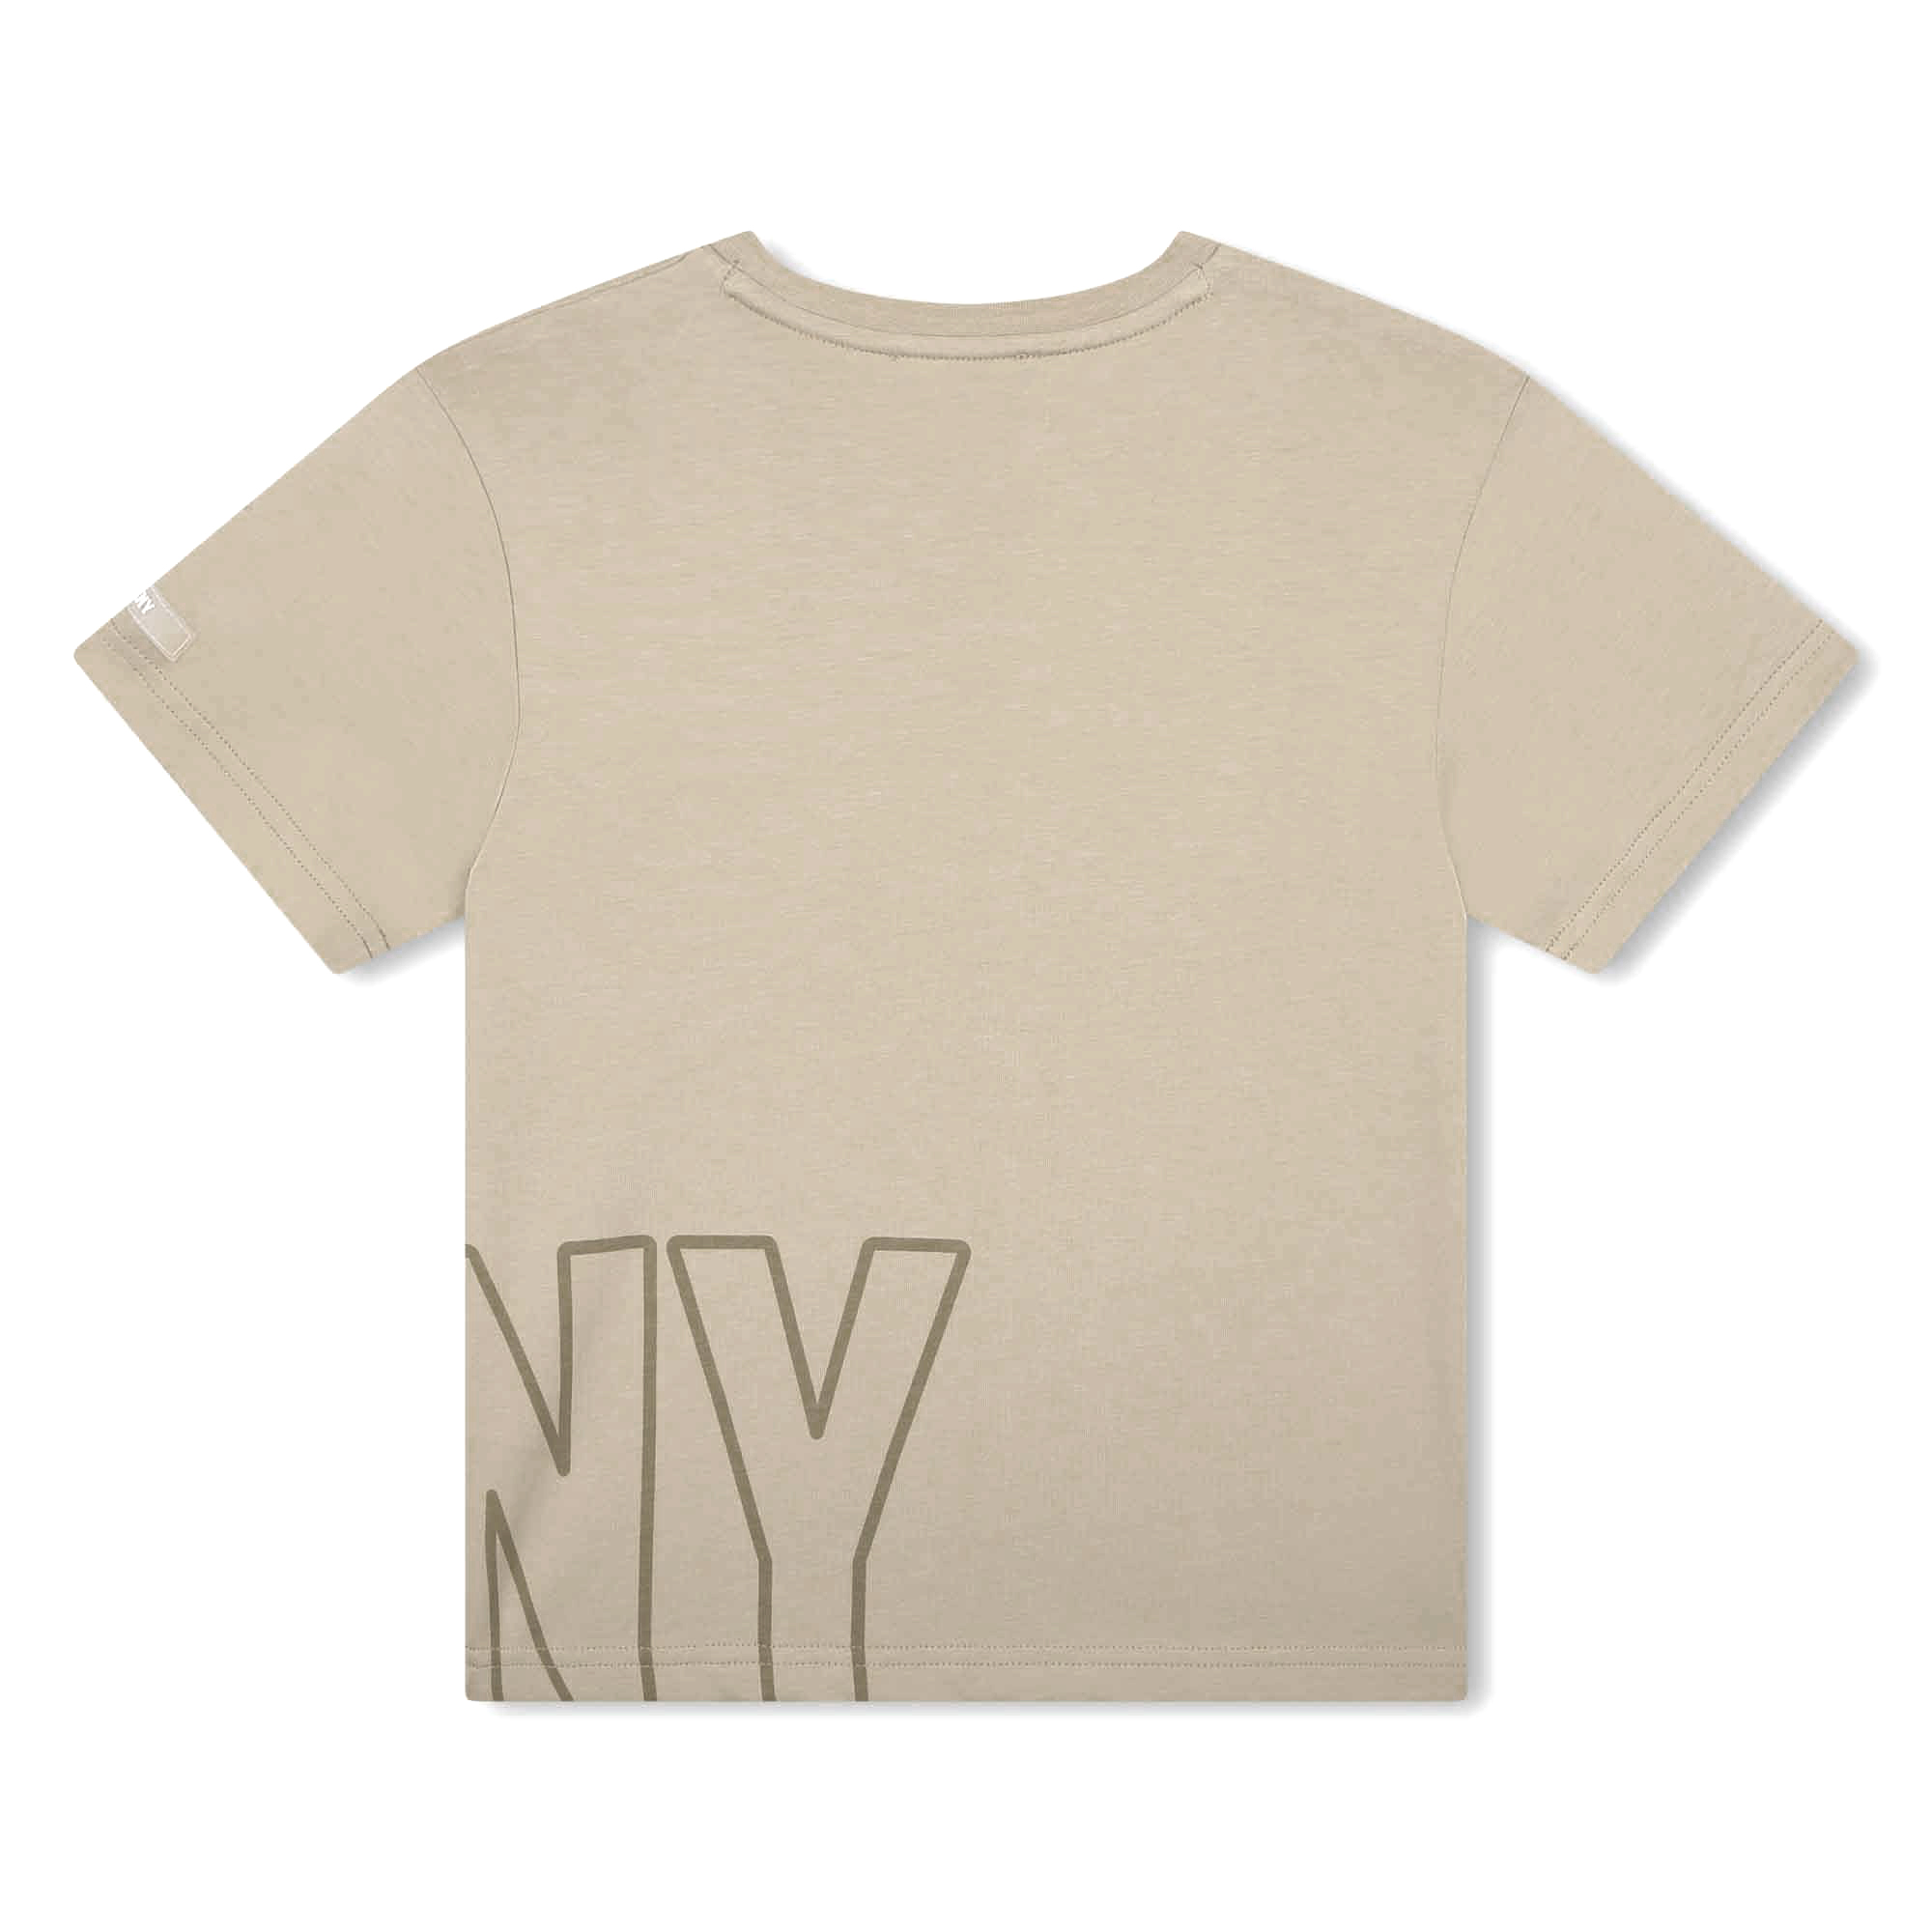 Camiseta de manga corta DKNY para UNISEXO